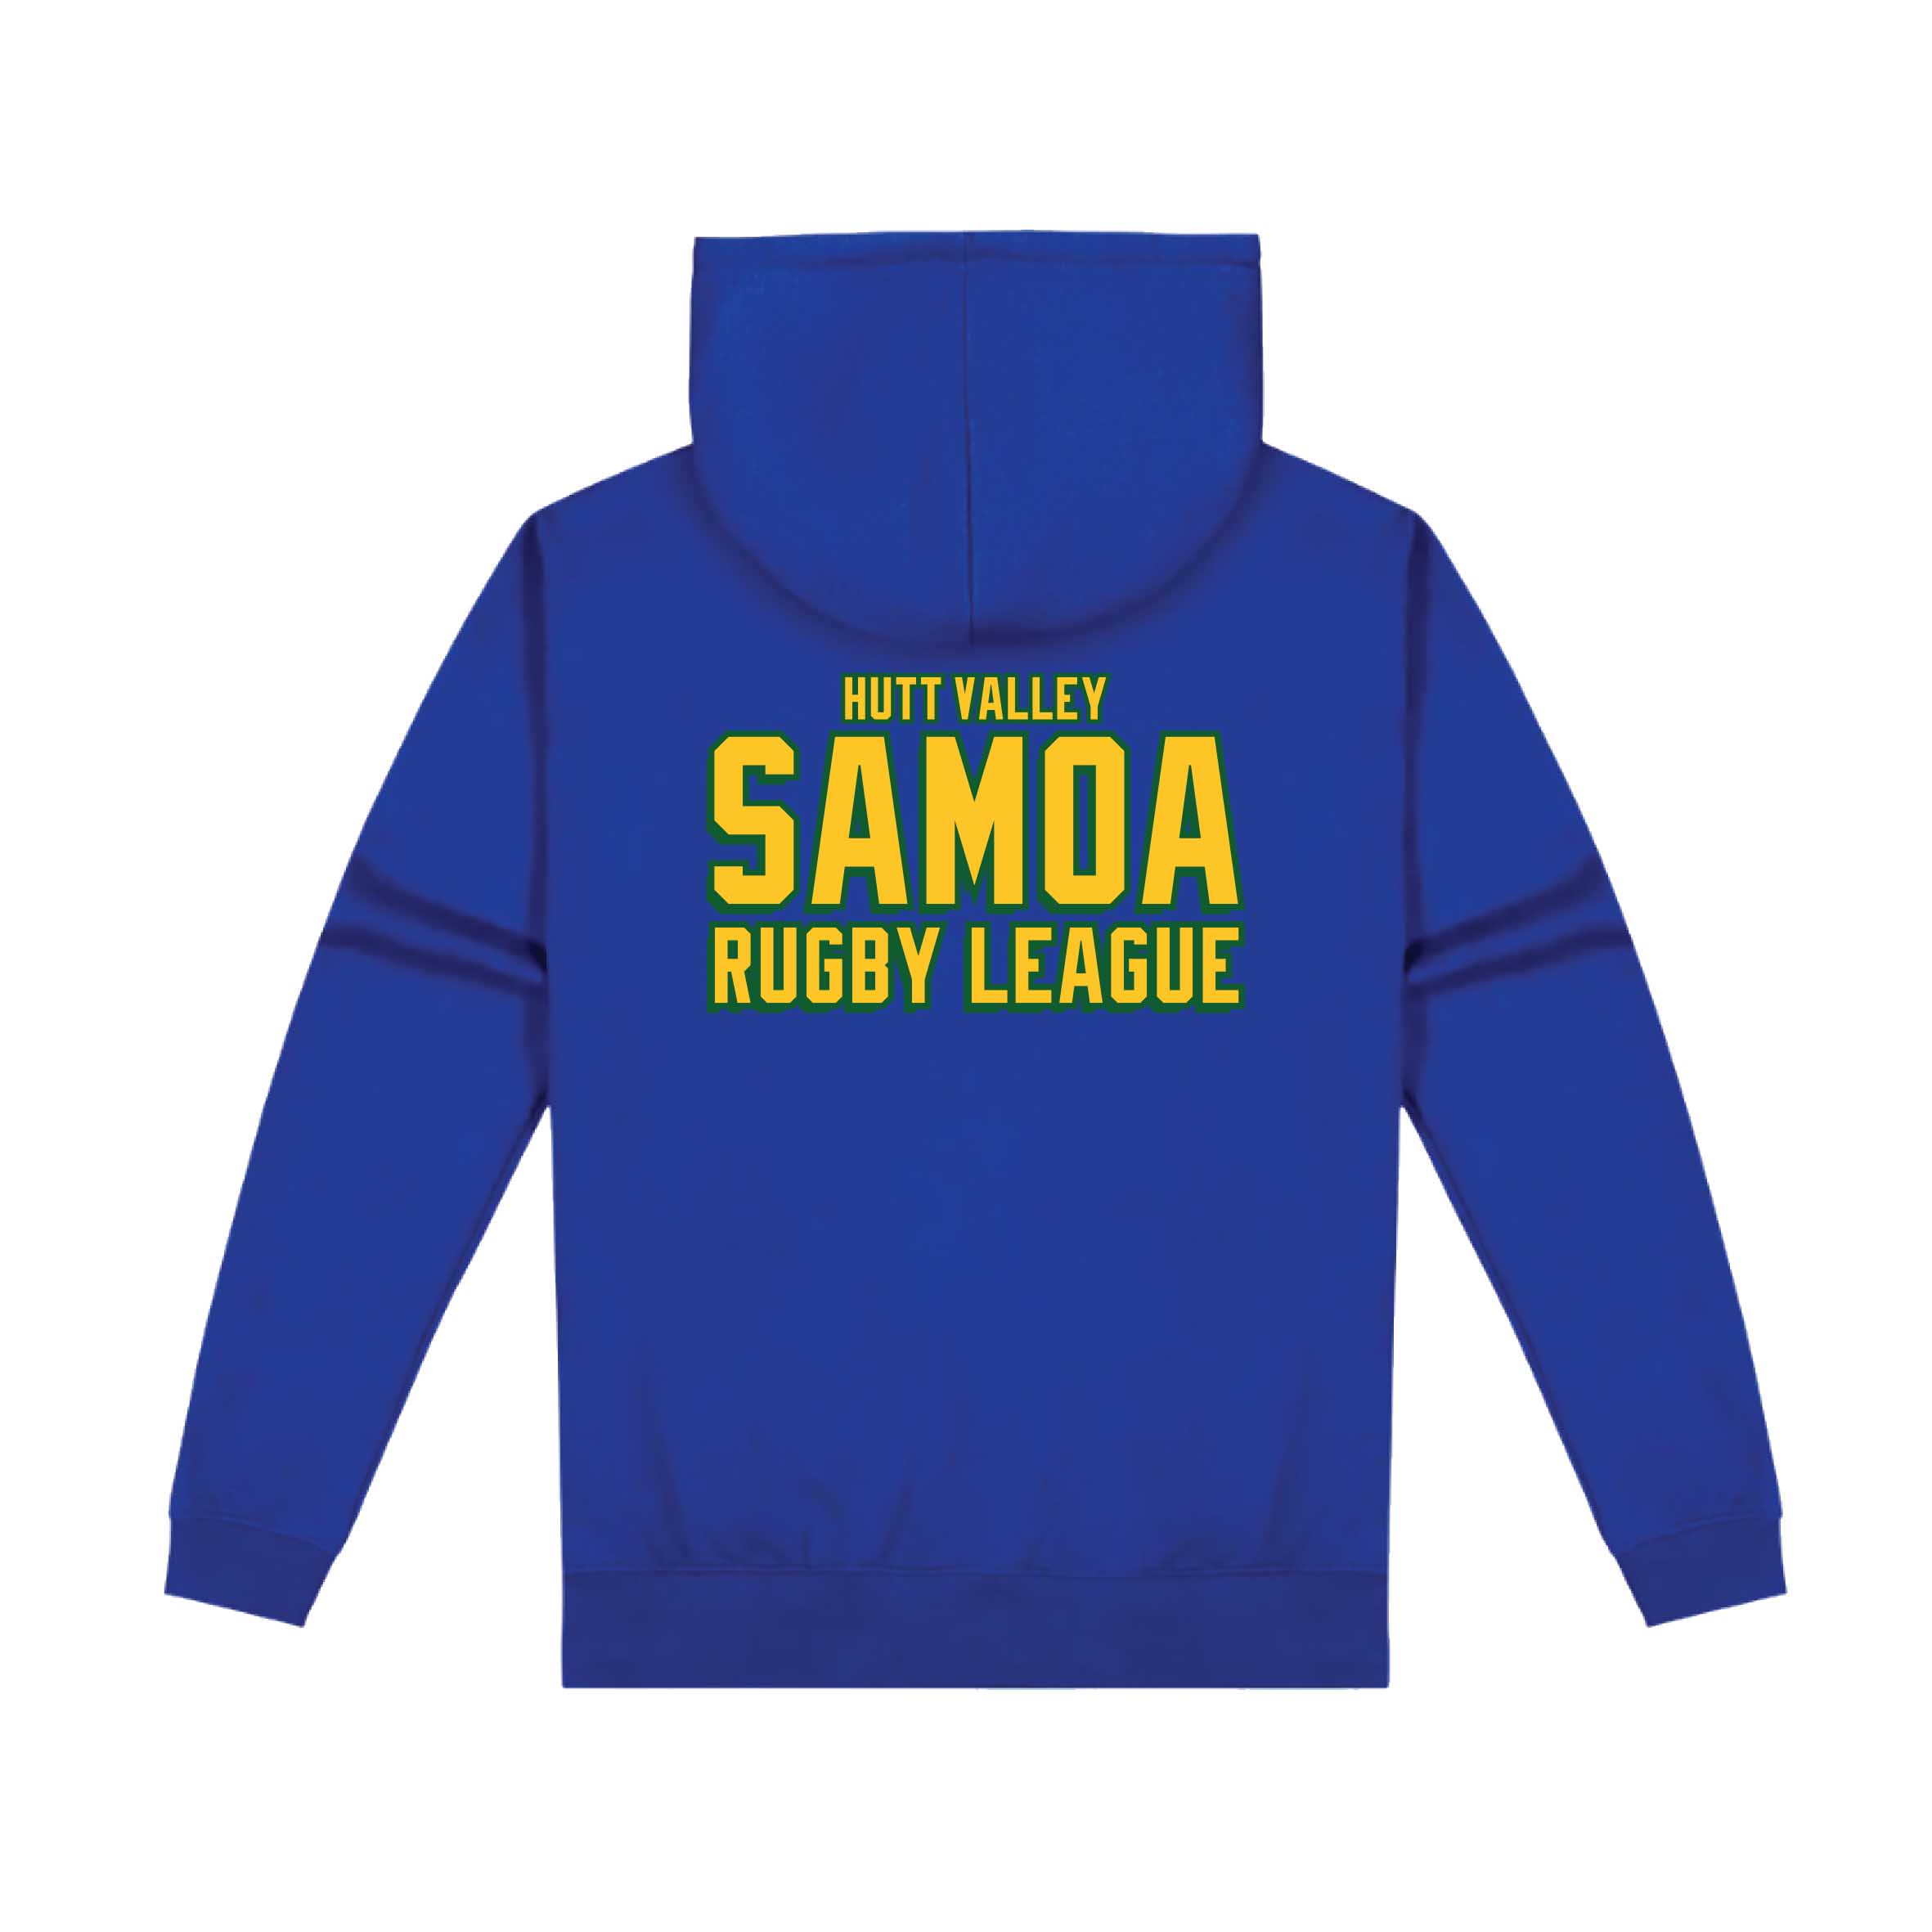 Hutt Valley Samoa Rugby League Hoodies Cus Classic Uniforms